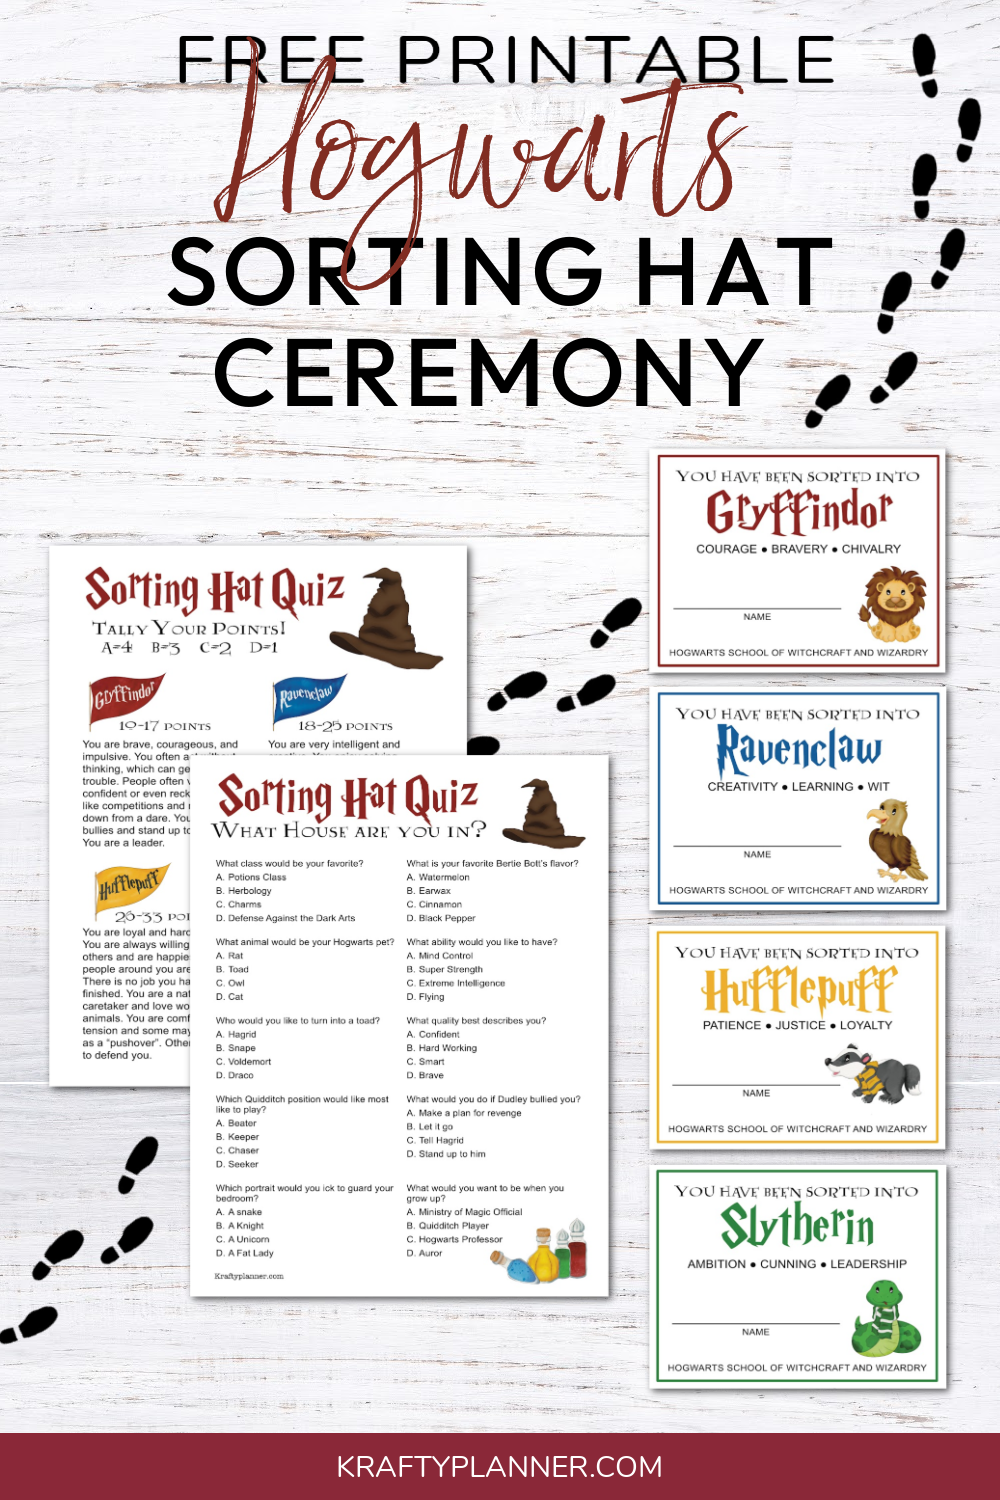 Free Printable Hogwarts Sorting Hat Ceremony